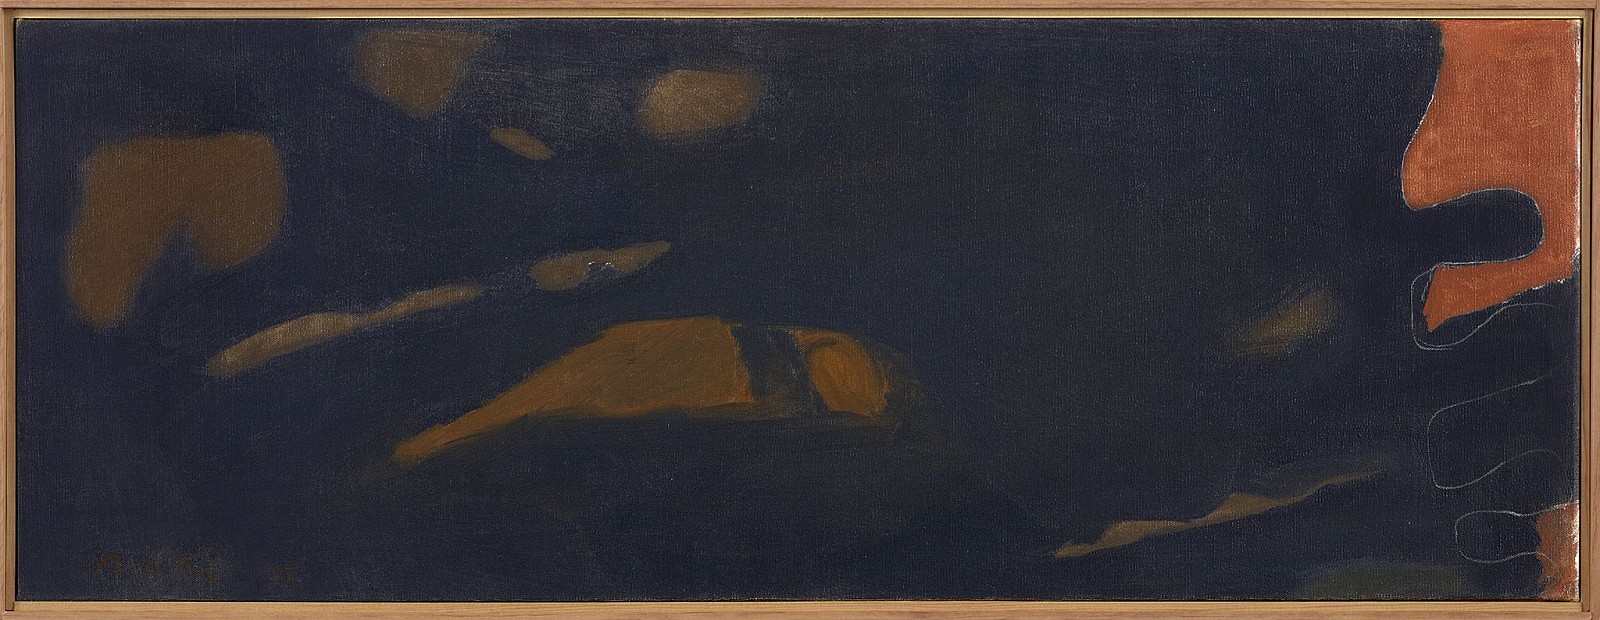 Perle Fine, Untitled (Prescience) | SOLD, 1951
Oil on canvas, 14 1/2 x 38 1/2 in. (36.8 x 97.8 cm)
© A.E. Artworks
FIN-00073